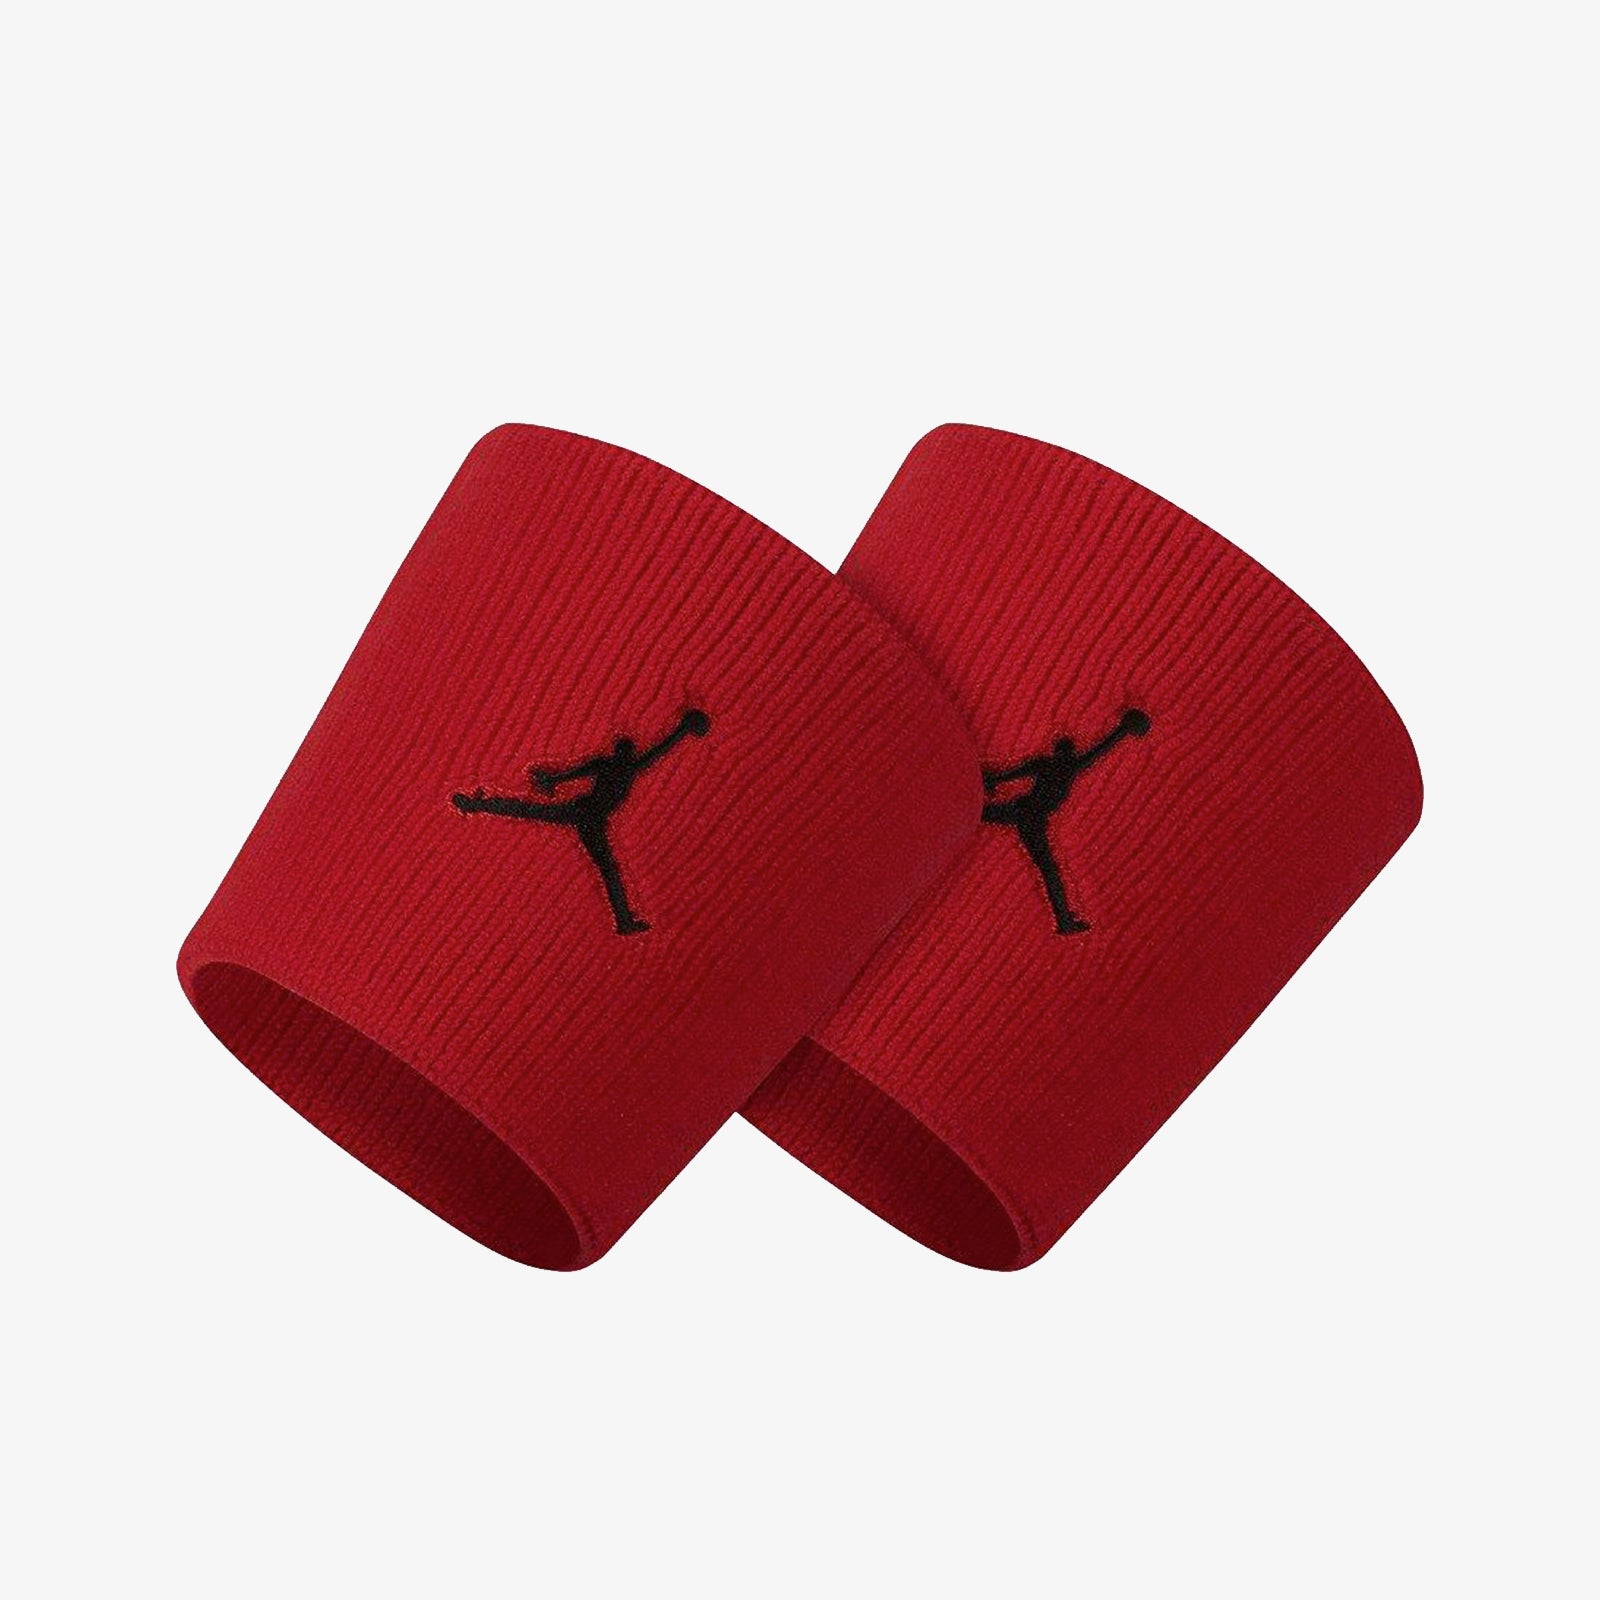 Jordan Jumpman Wristbands - Red/Black - Throwback